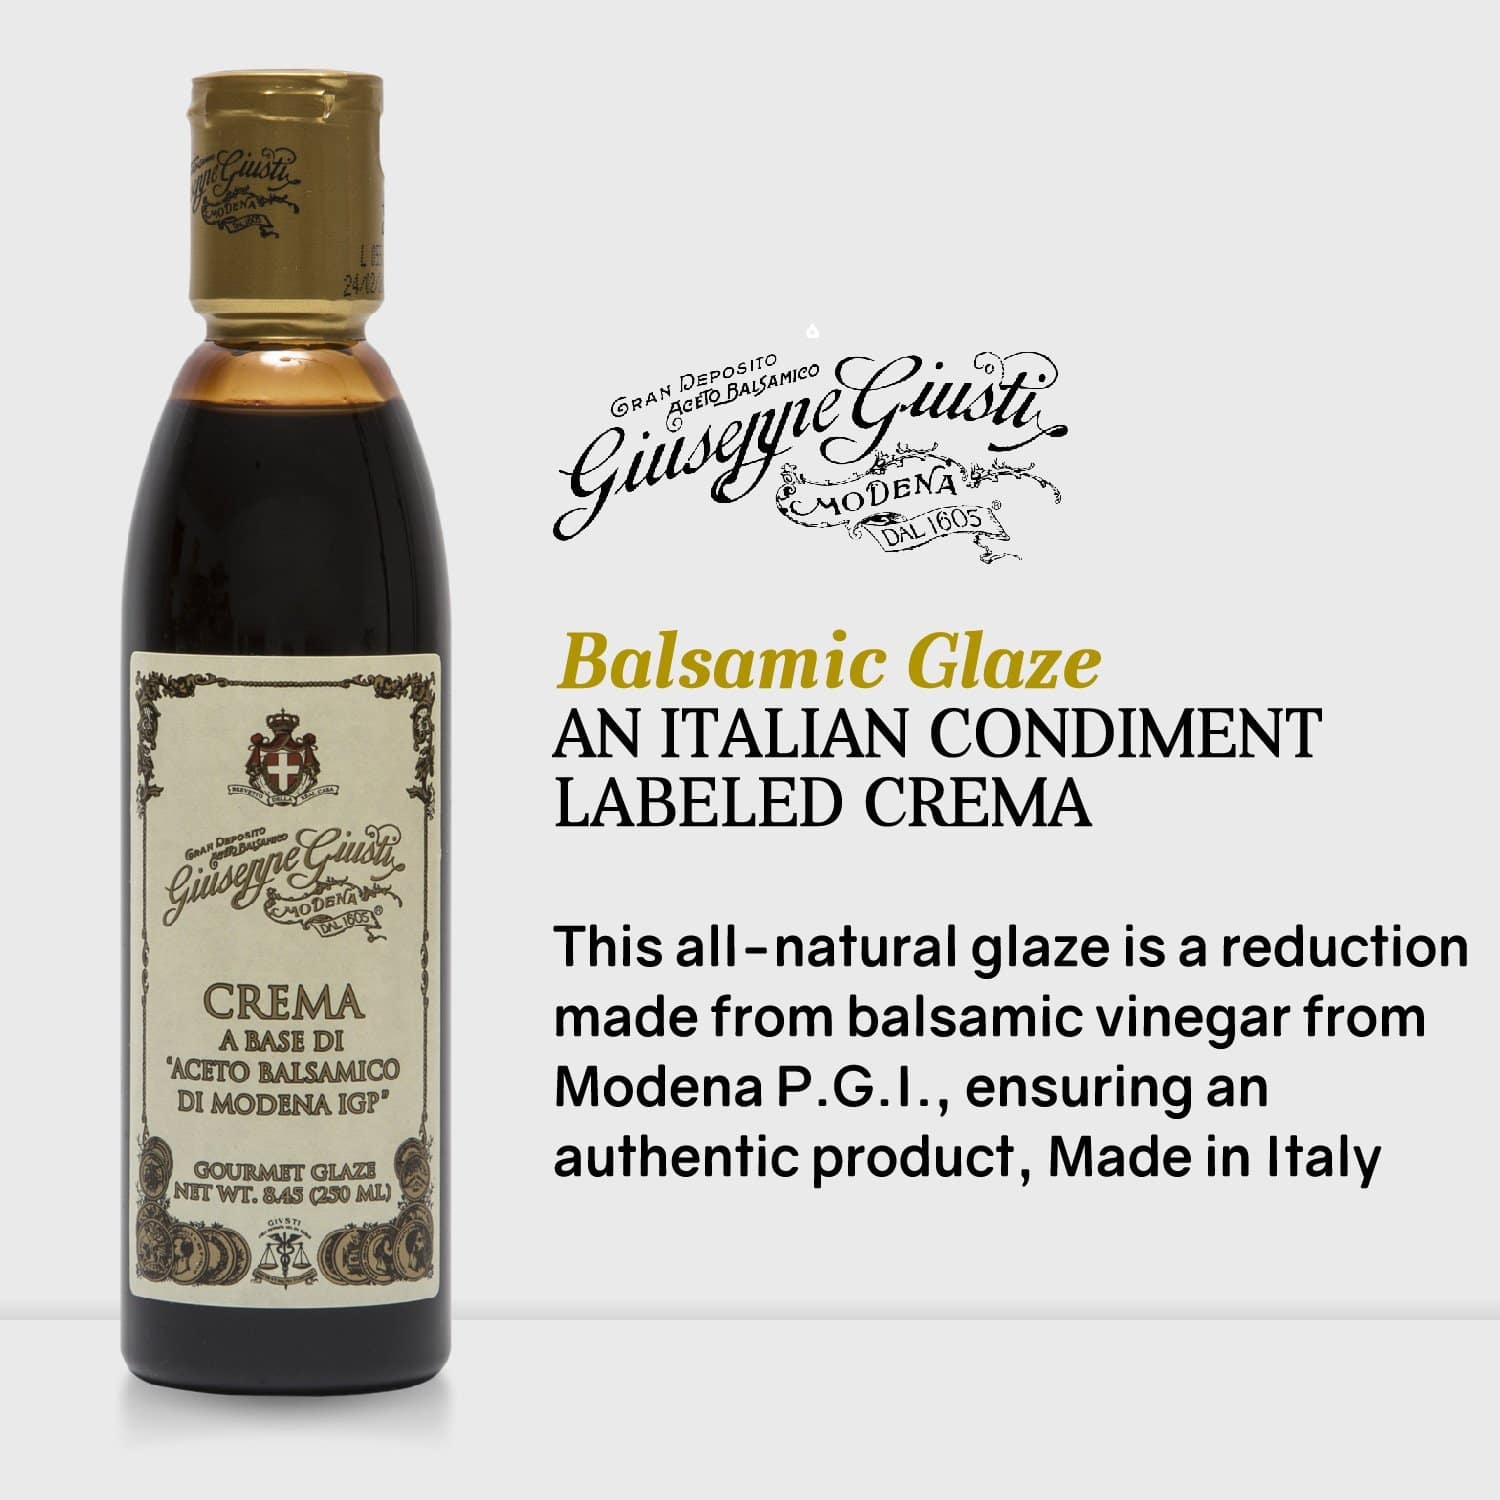 Buy Giusti Gourmet Glaze with Balsamic Vinegar of Modena online